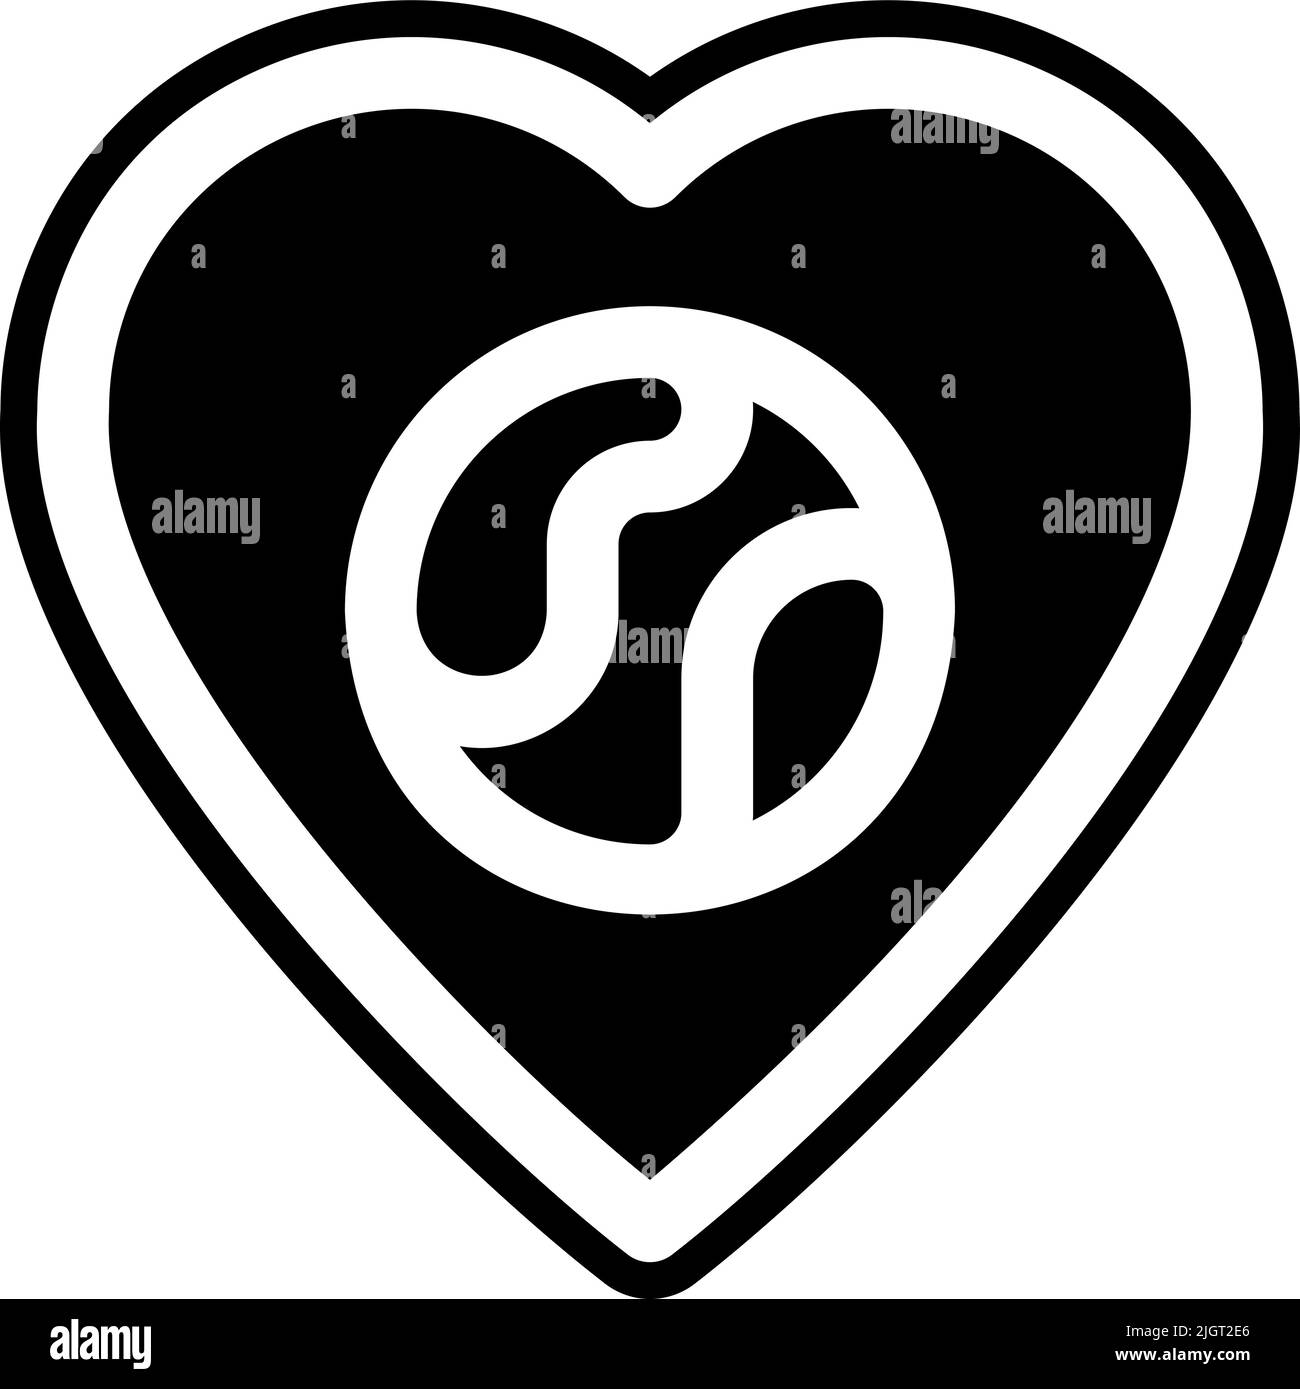 Earth day heart icon . Stock Vector